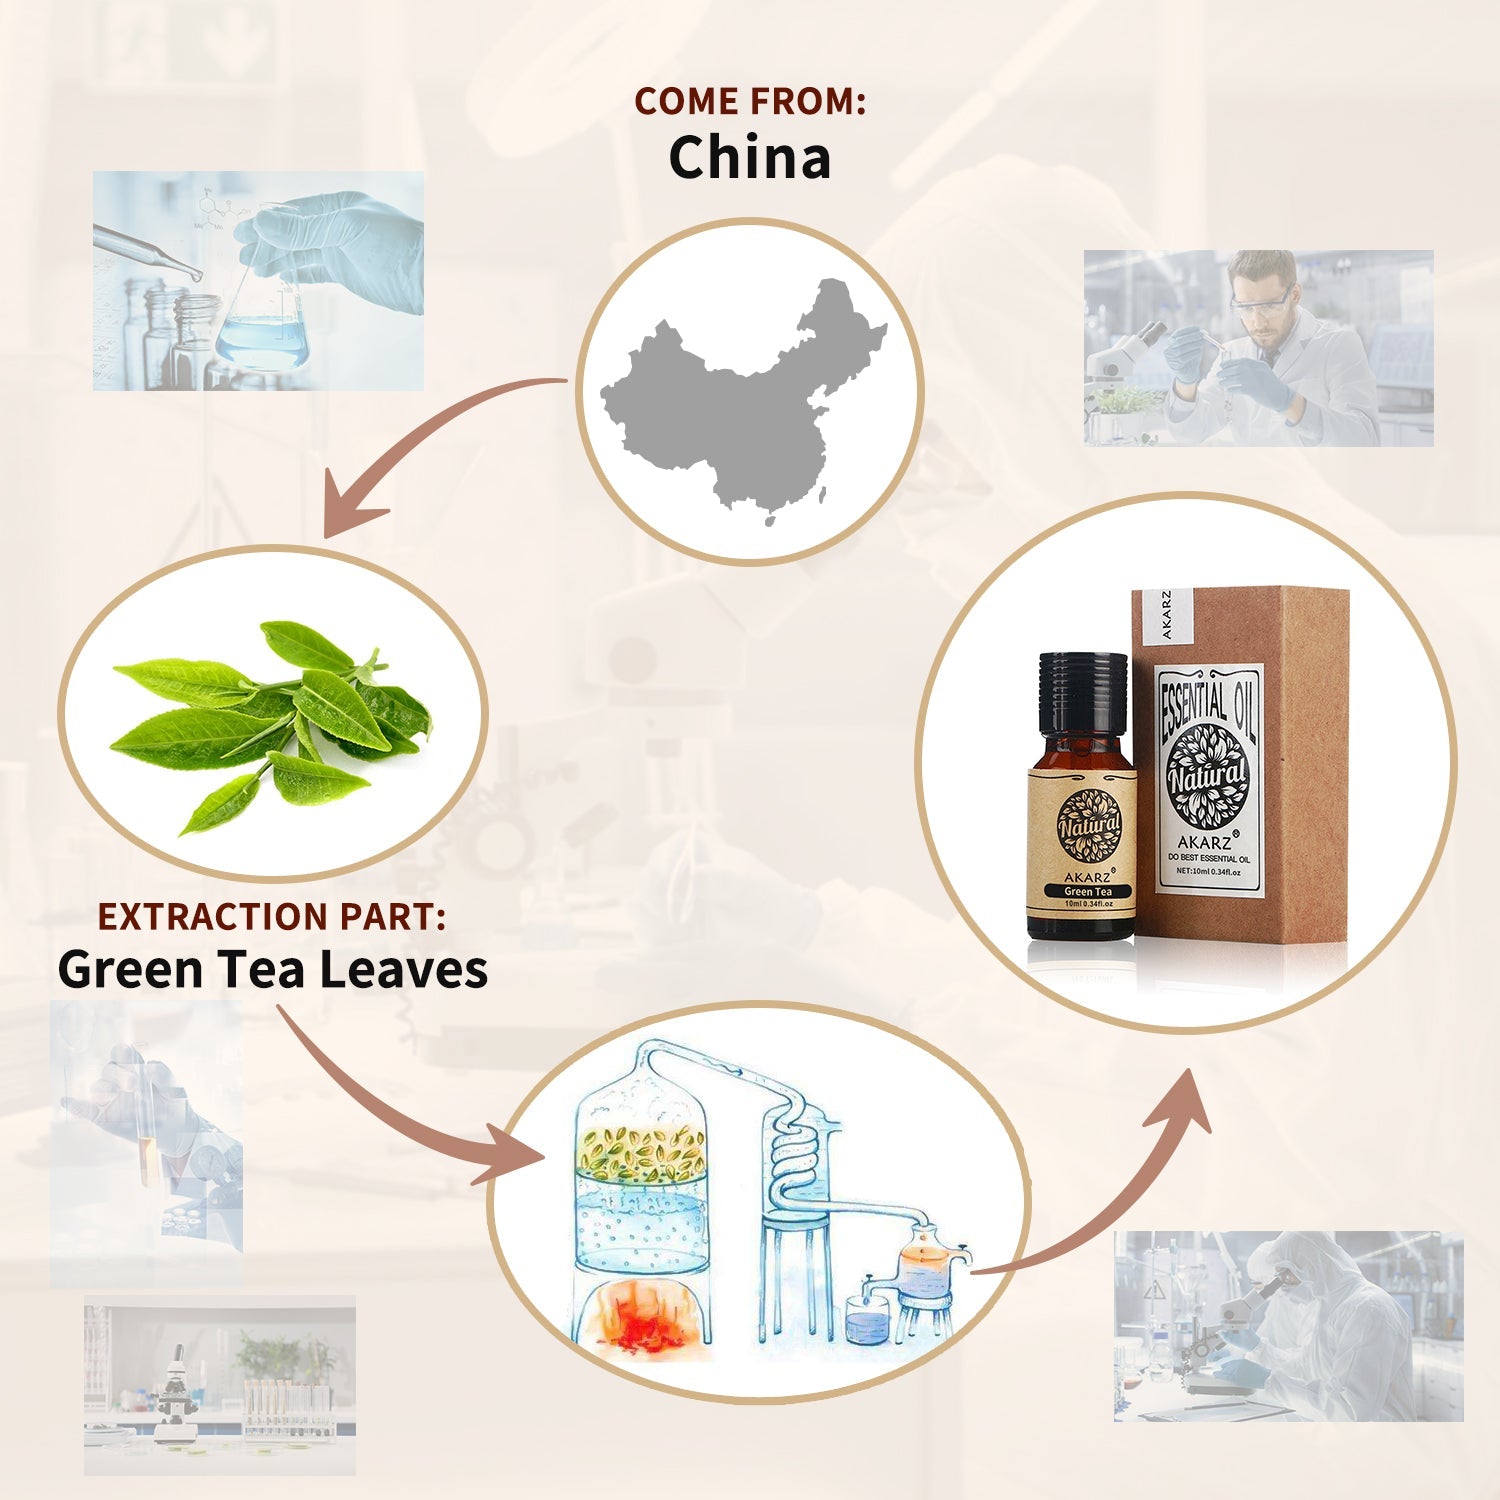 Green Tea Essential Oil AKARZ Natural And Pure ( 30ML 100ML )